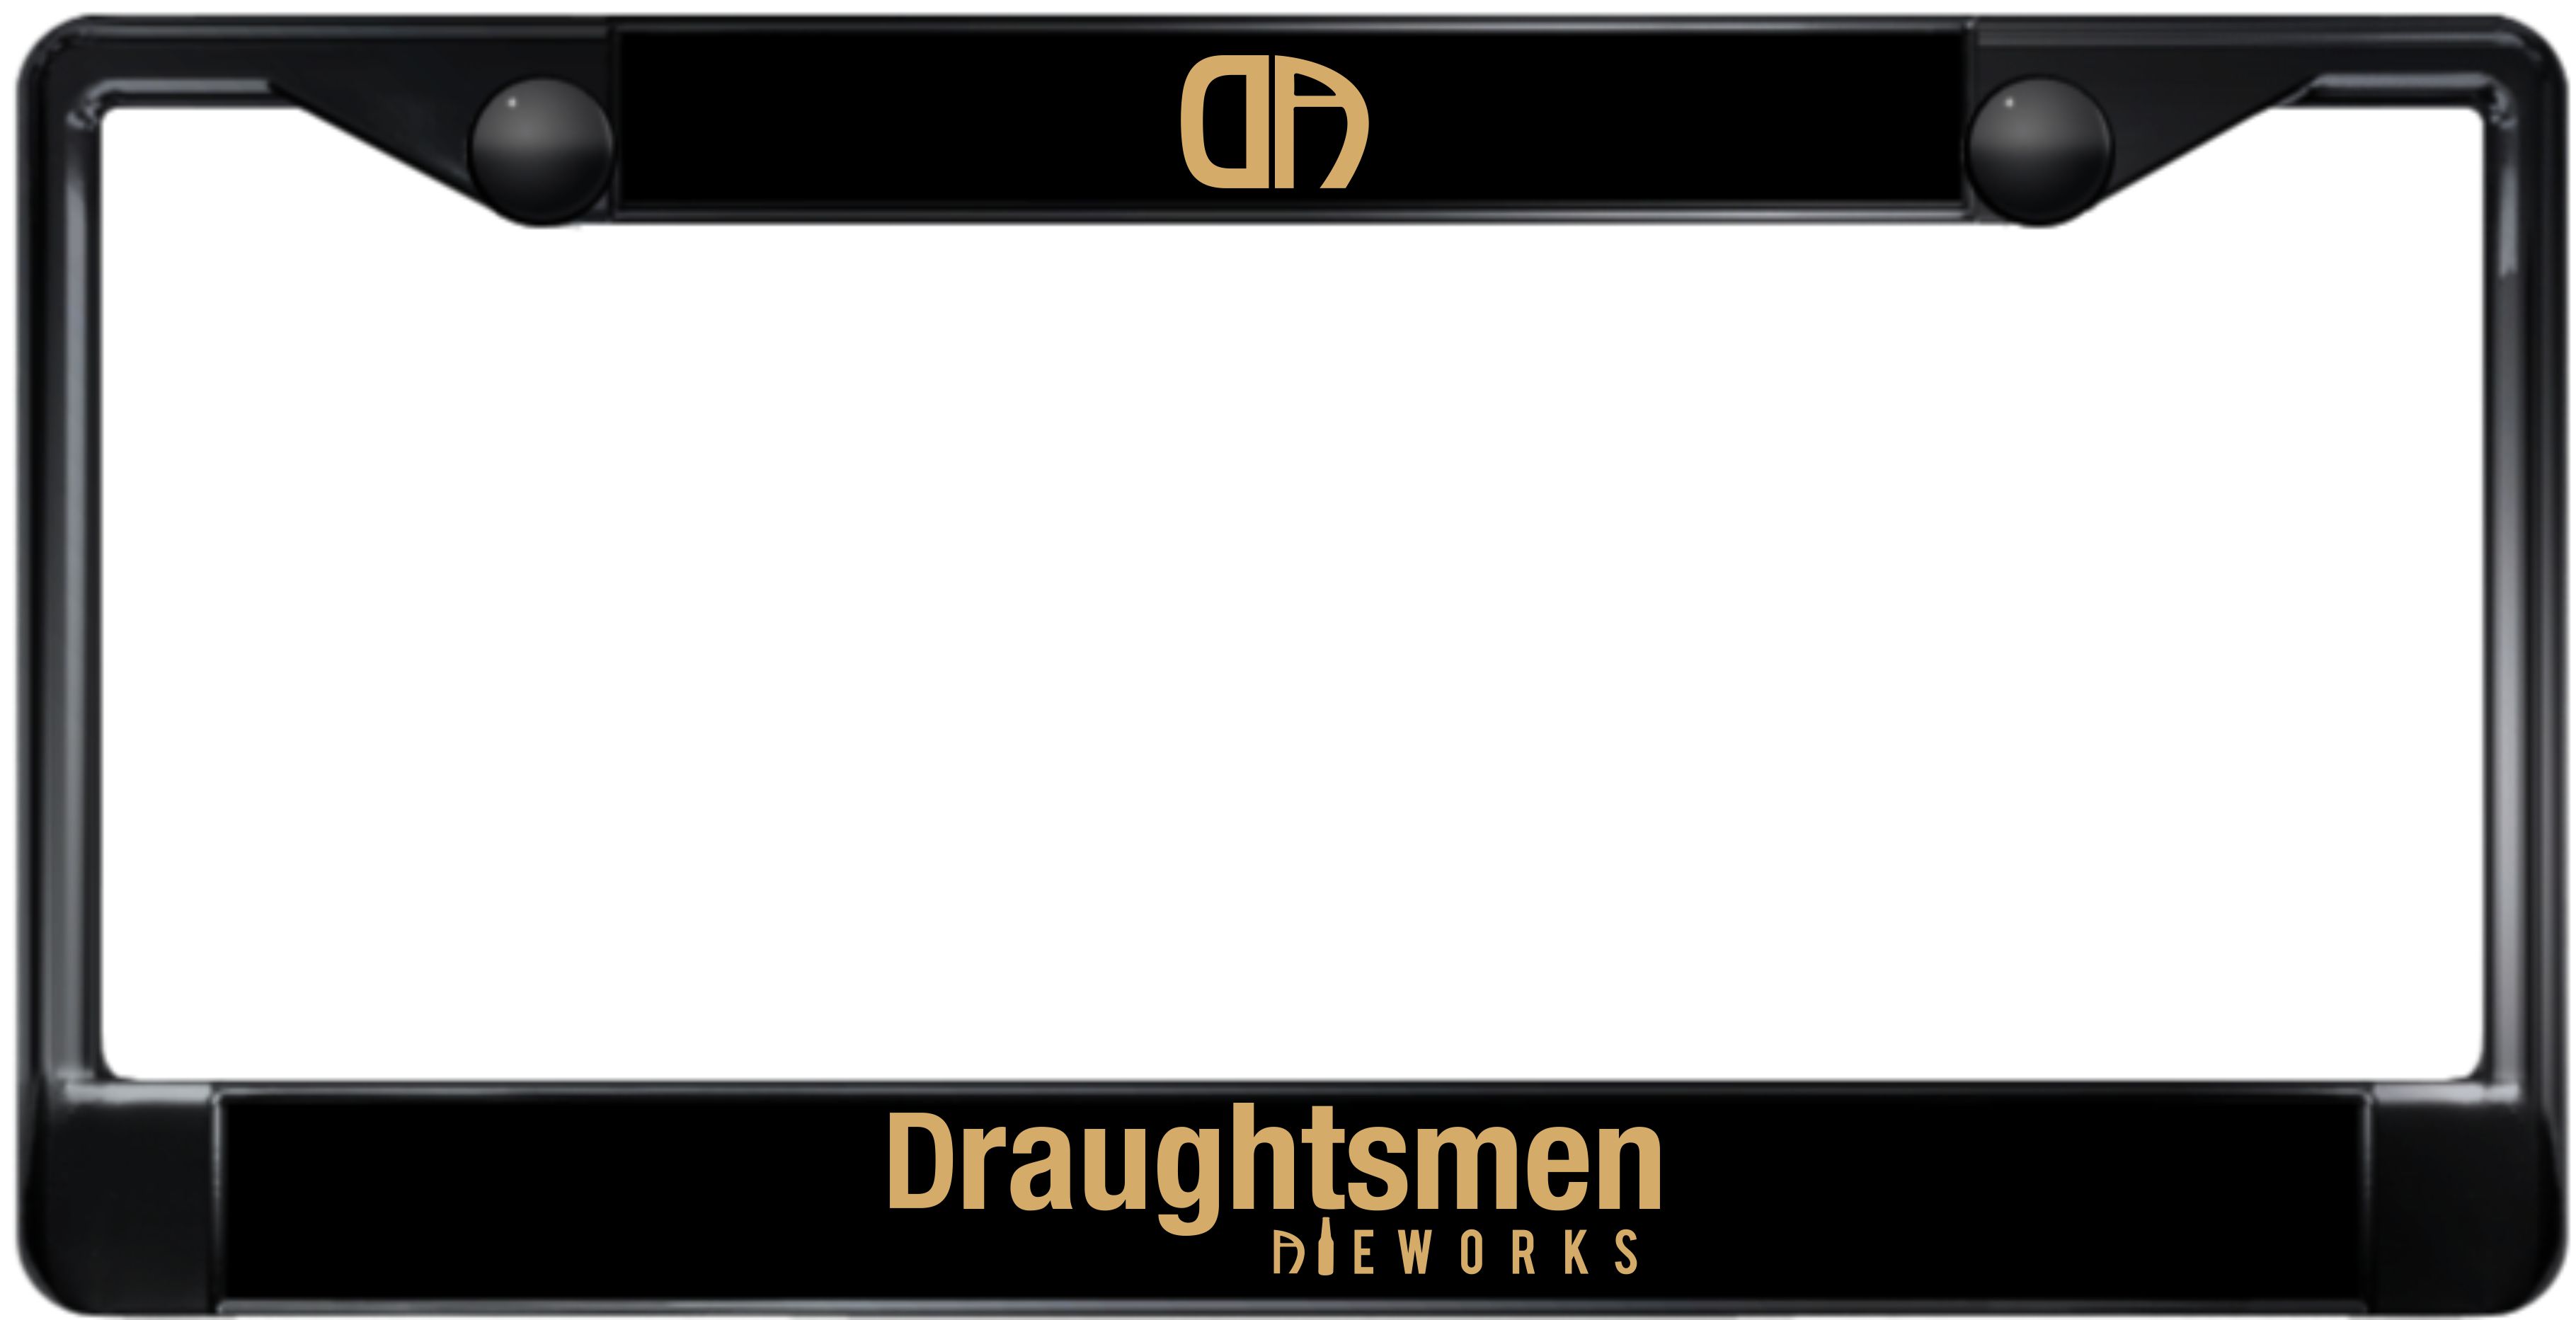 DA - Custom metal license plate frame